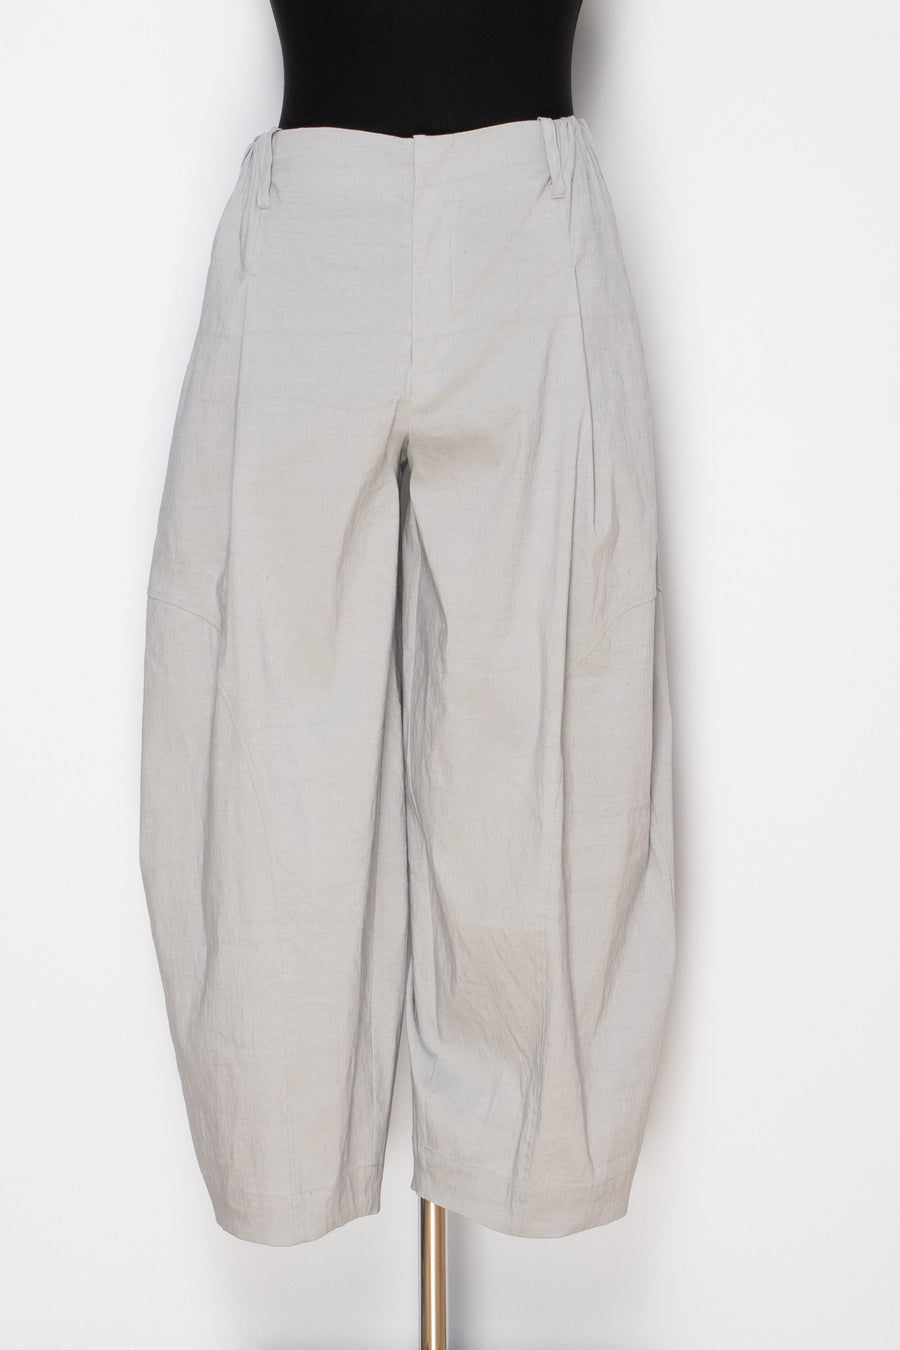 Linen/viscose mix pants with spandex (Item no. 222h1)